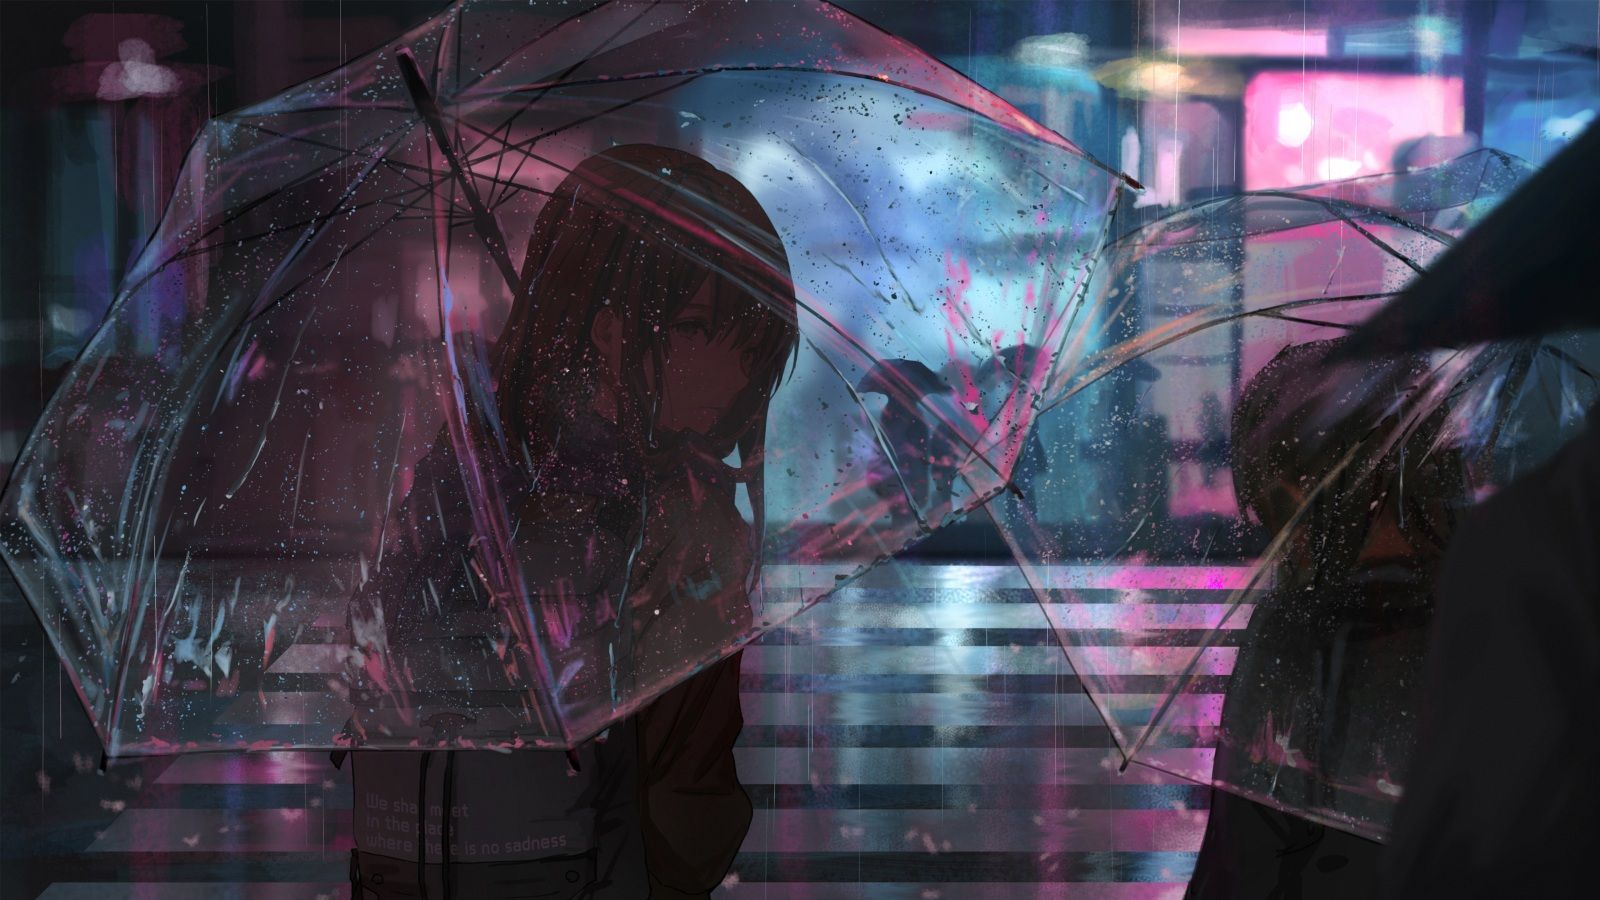 Wallpaper 4k Anime Girl In Rain With Umbrella 4k Wallpaper